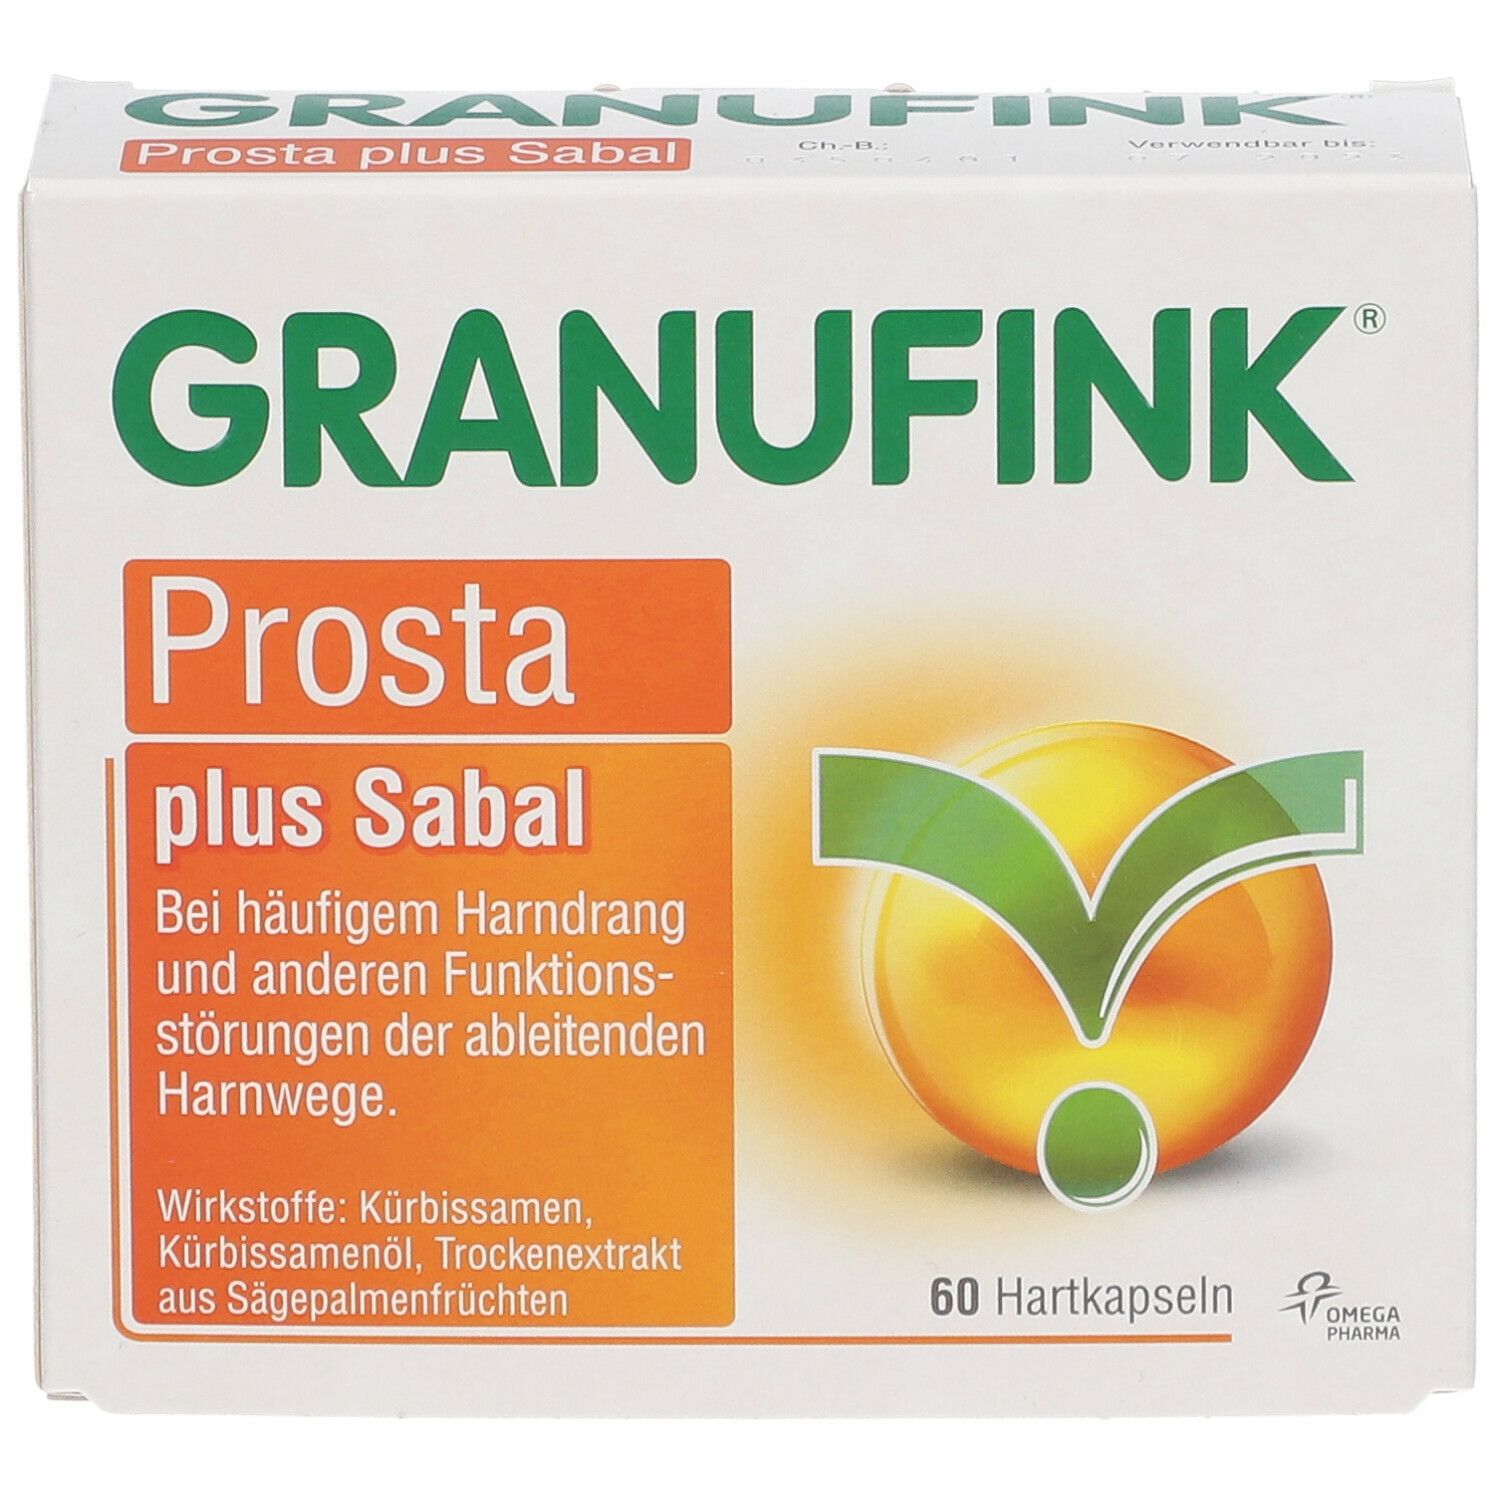 GRANU FINK® Prosta plus Sabal